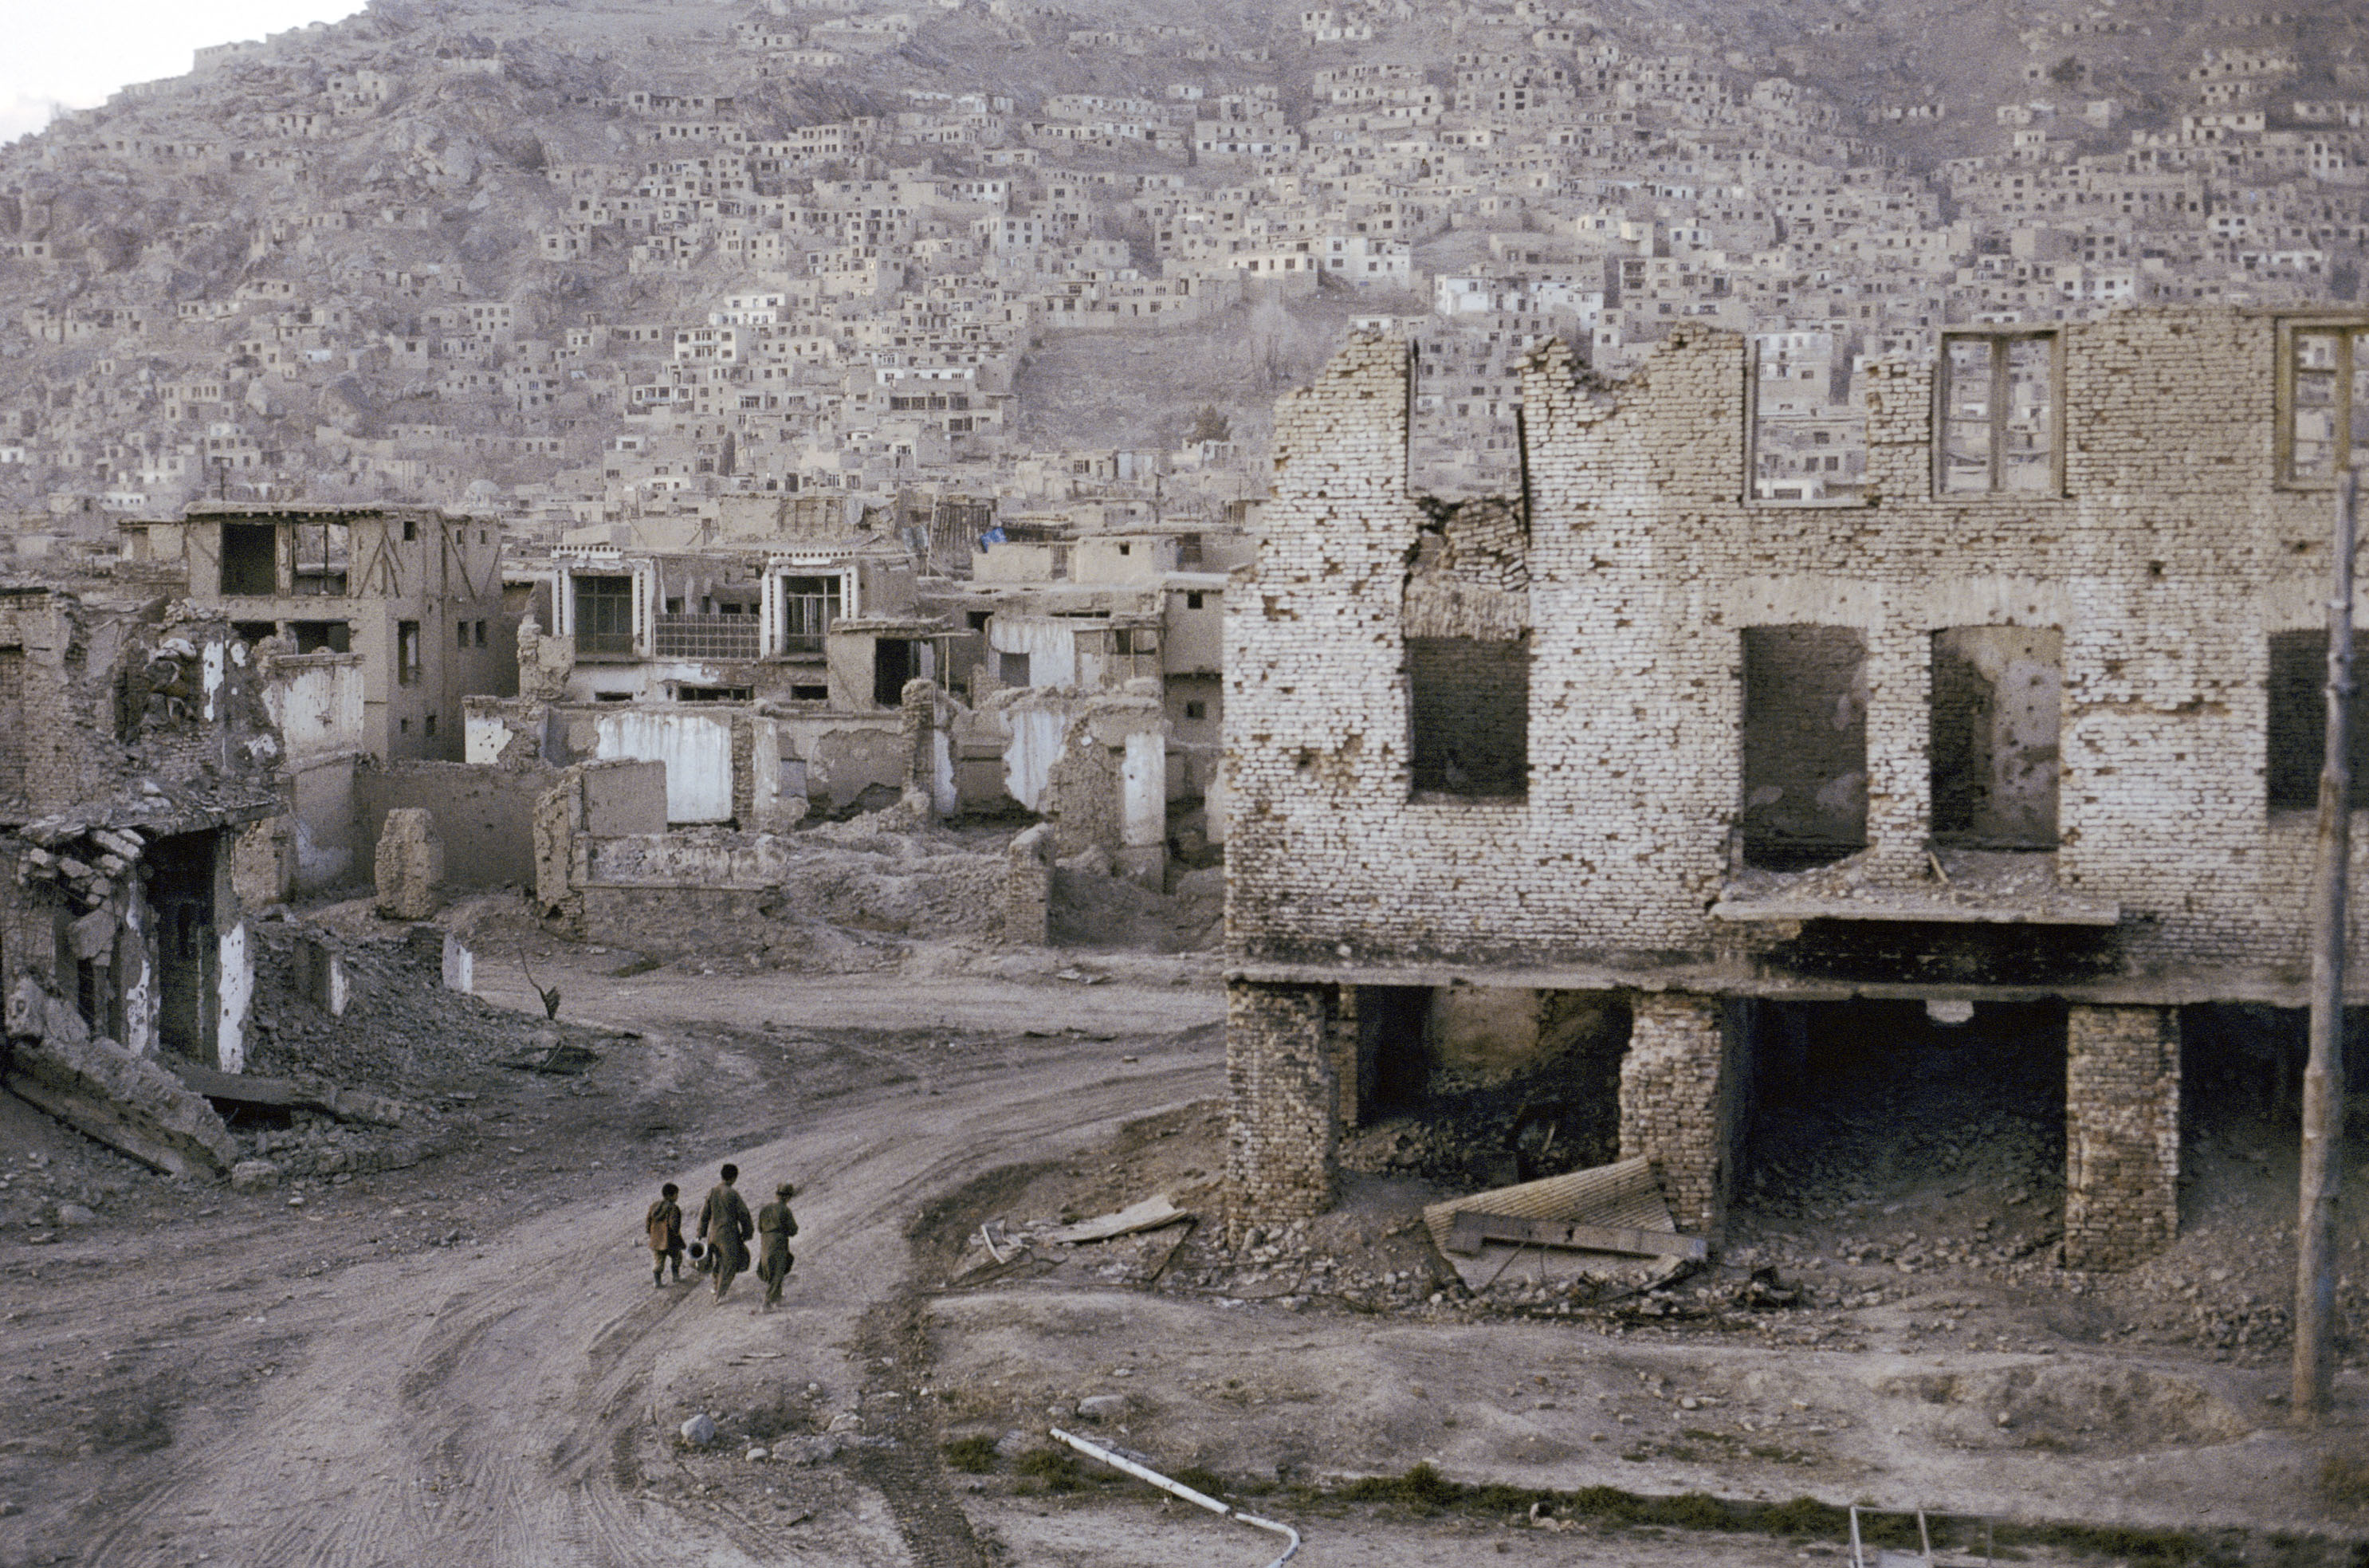 Kabul, Afghanistan, 1995 